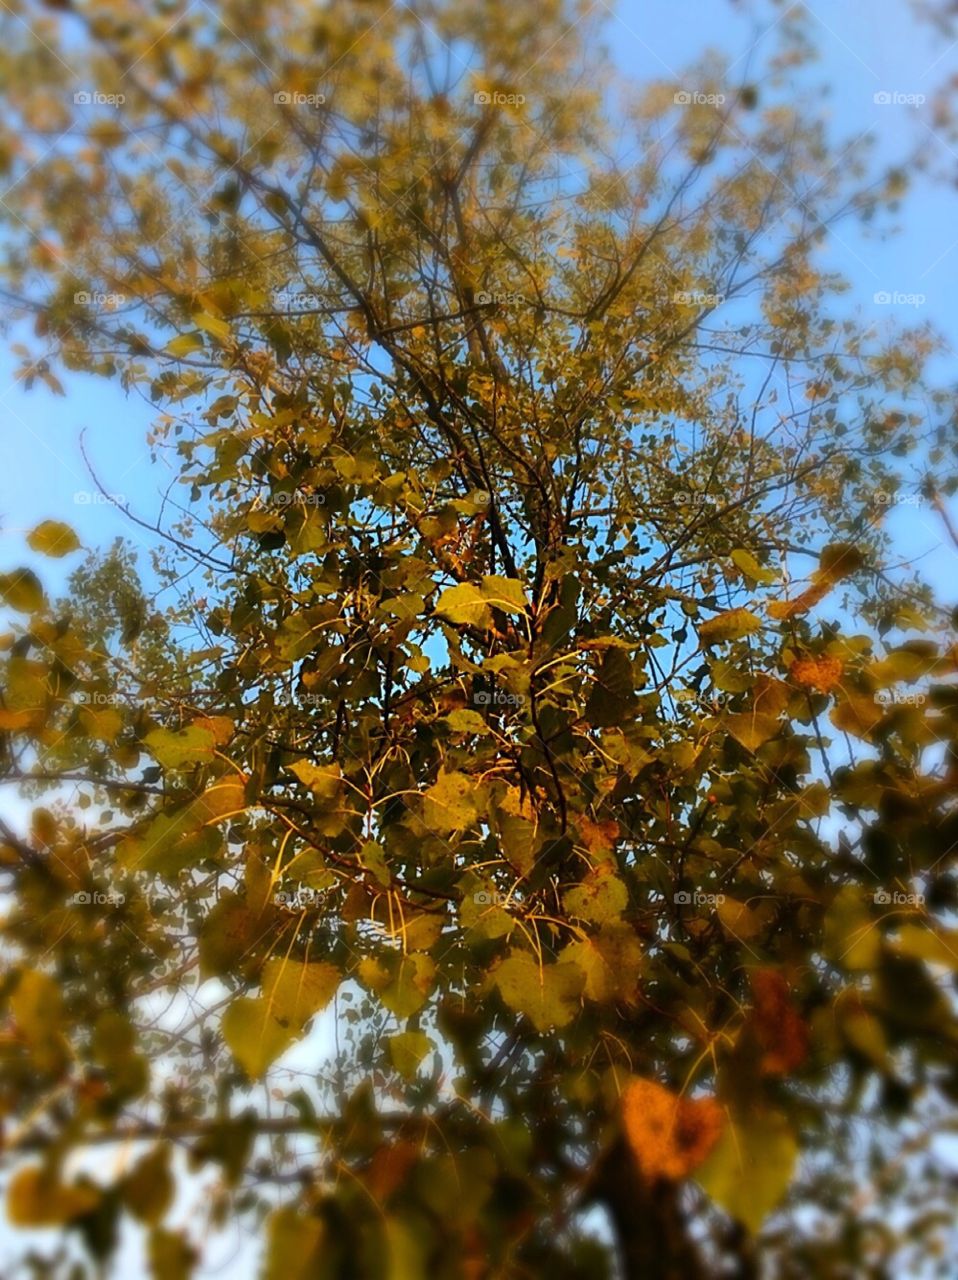 Edge of Fall